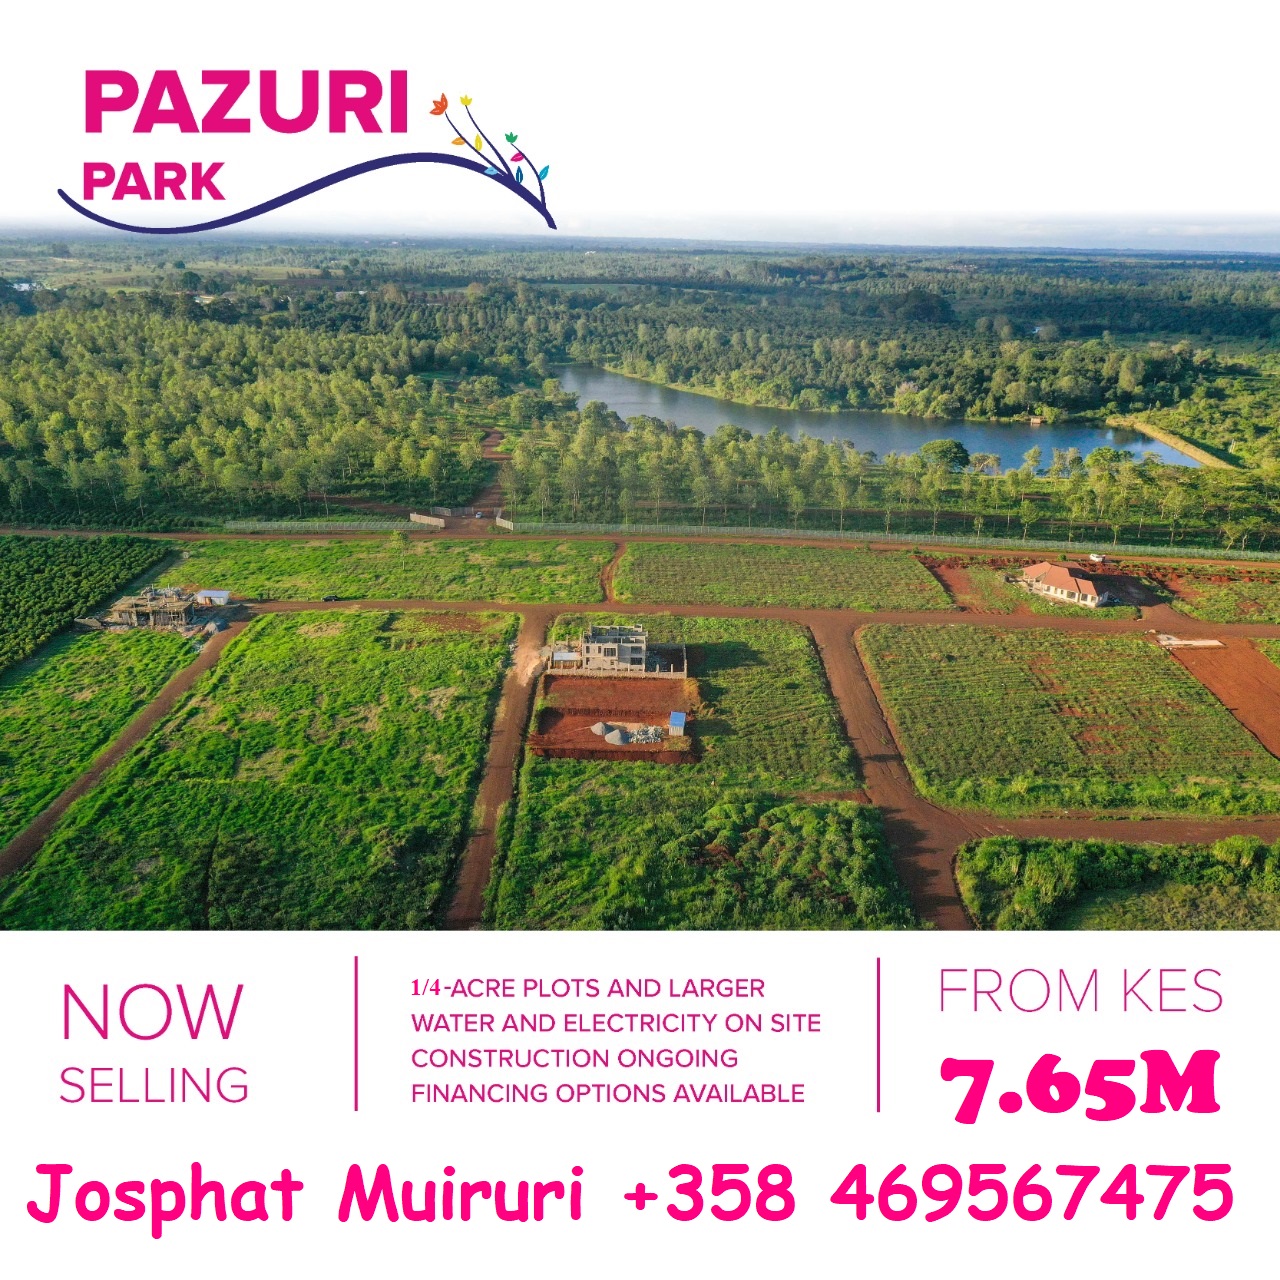 1/4 Acre plot for sale in Tatu city (Pazuri park at Oaklands)